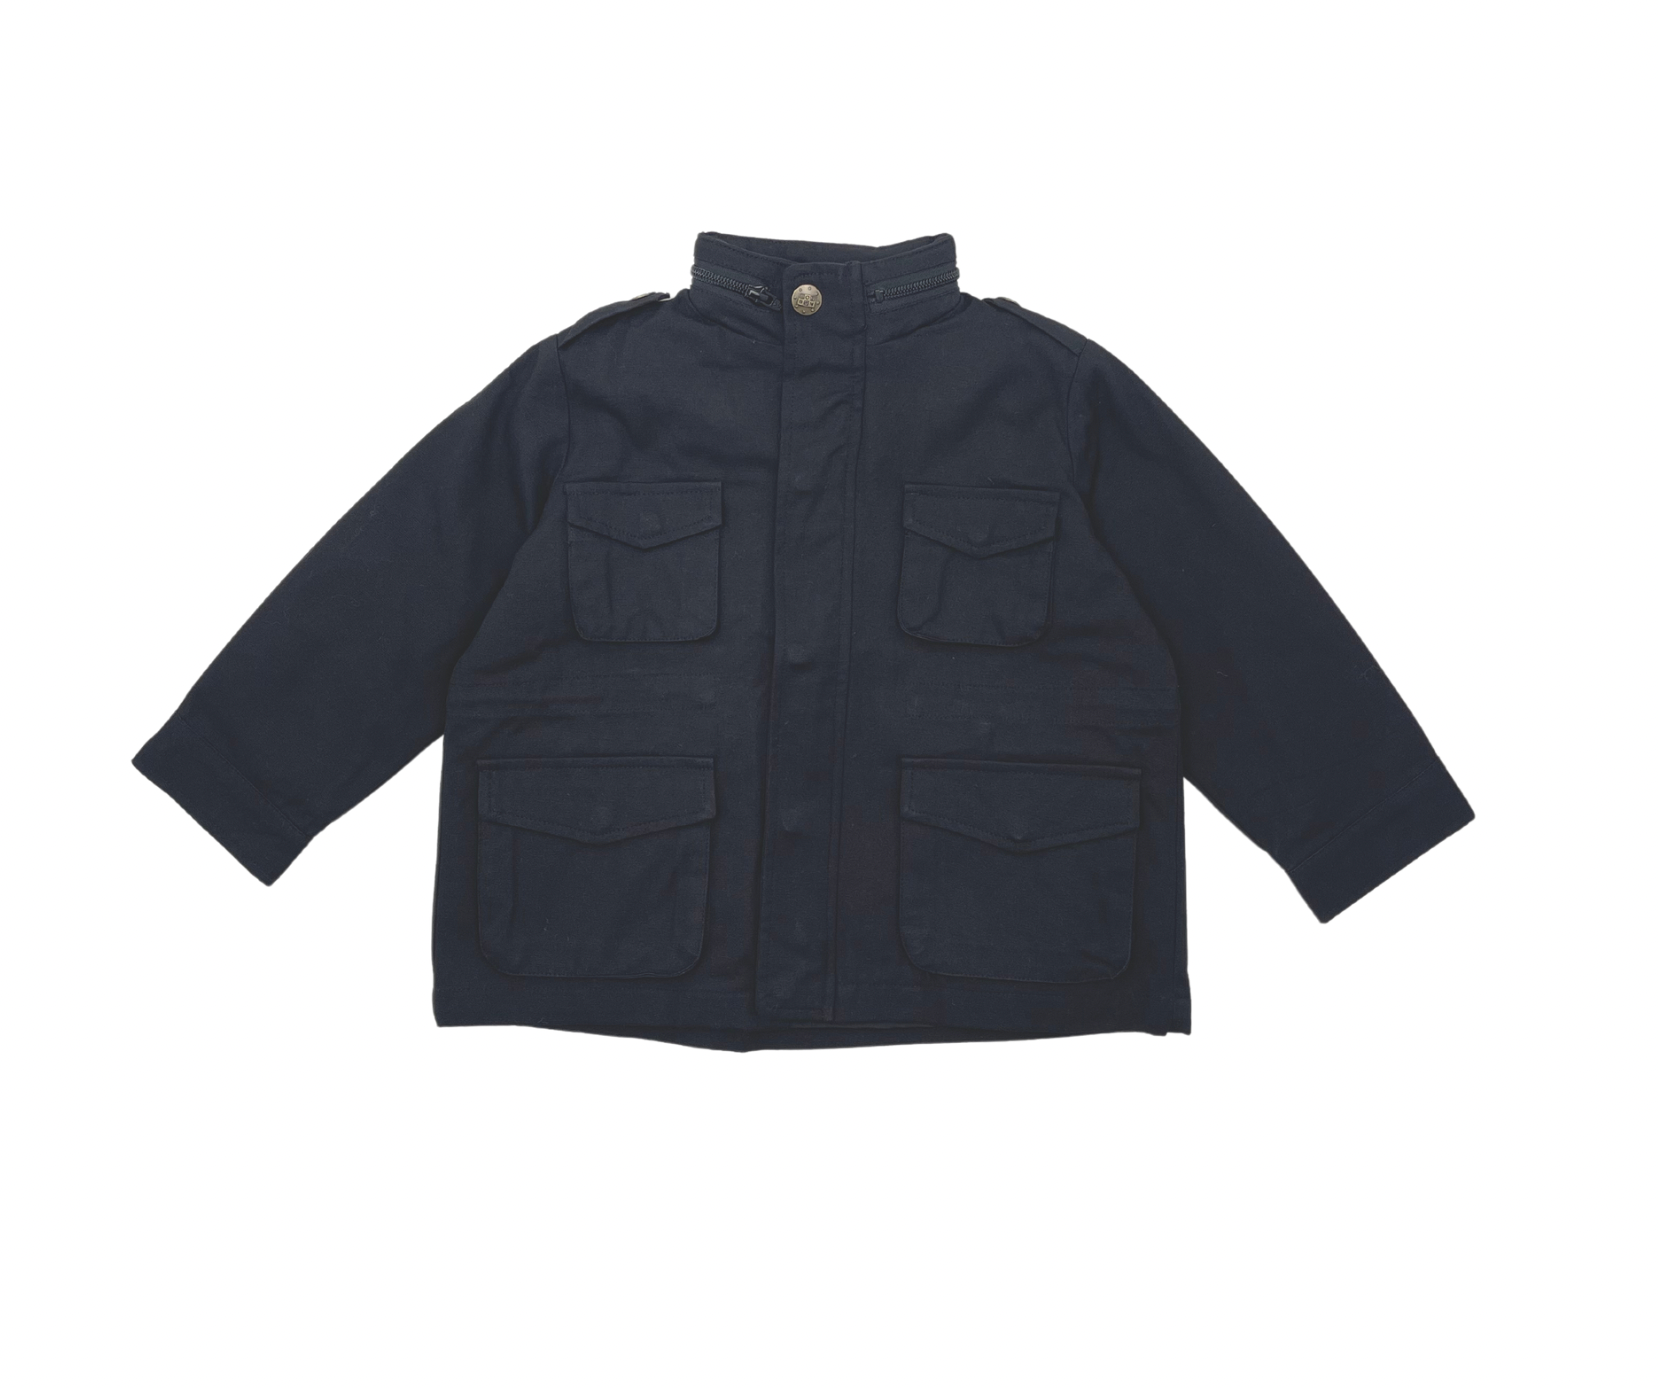 BONTON - Black jacket, removable lining, hood - 4 years old